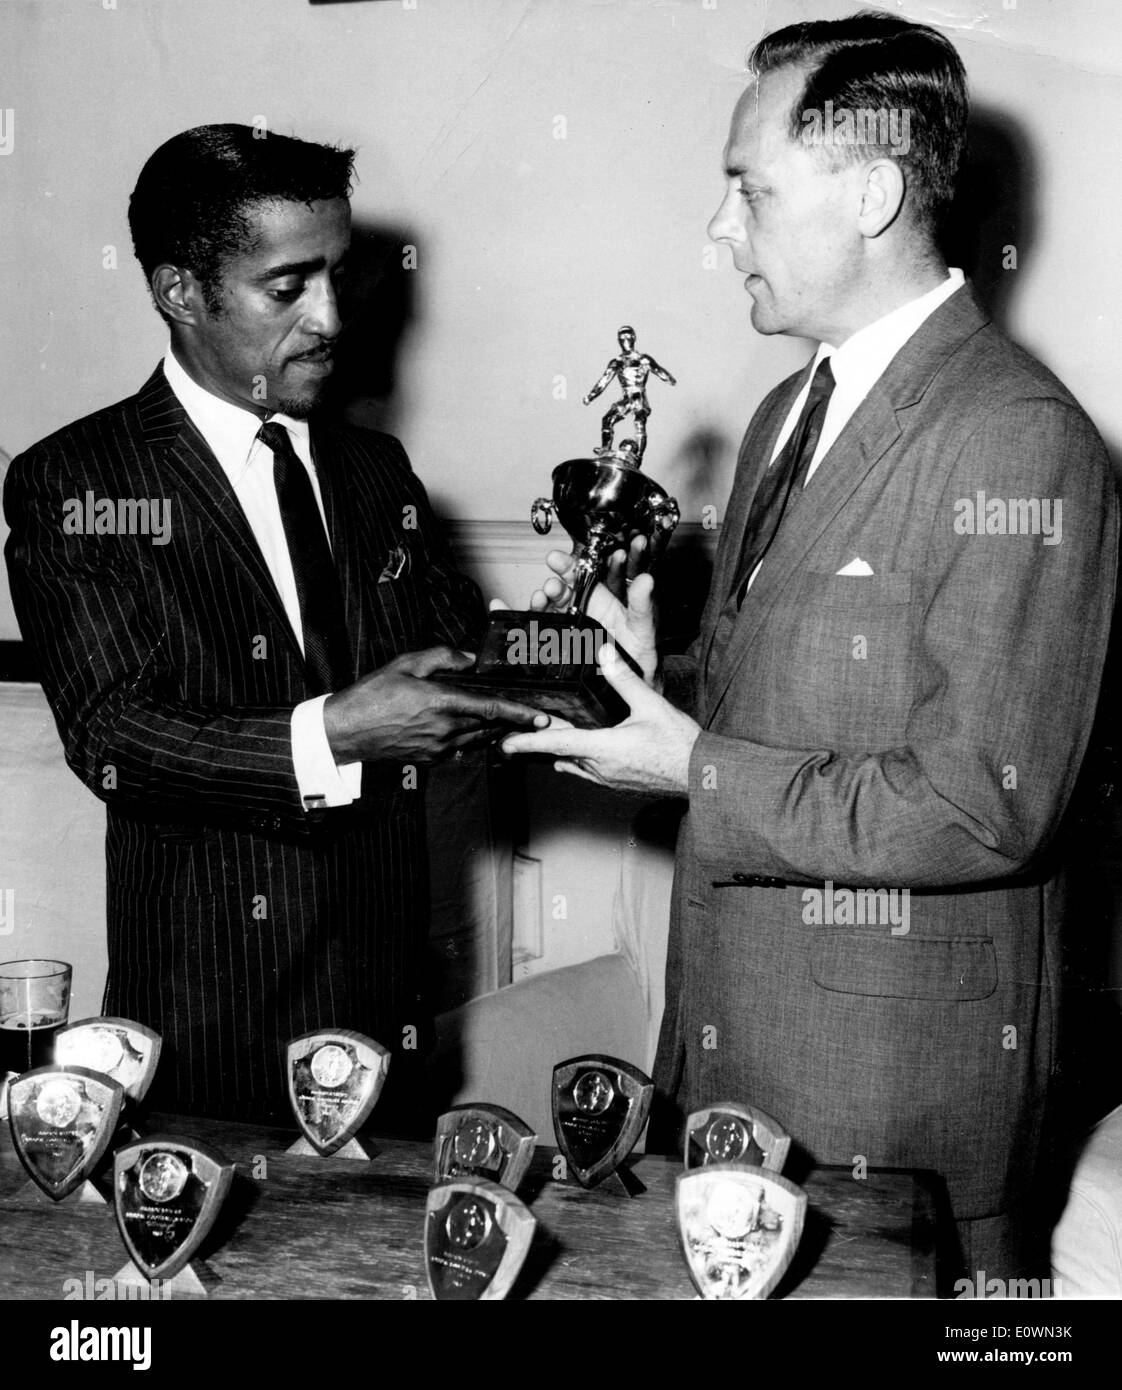 Sammy Davis Jr. presenting the Diamond Music Company trophy to David White Stock Photo